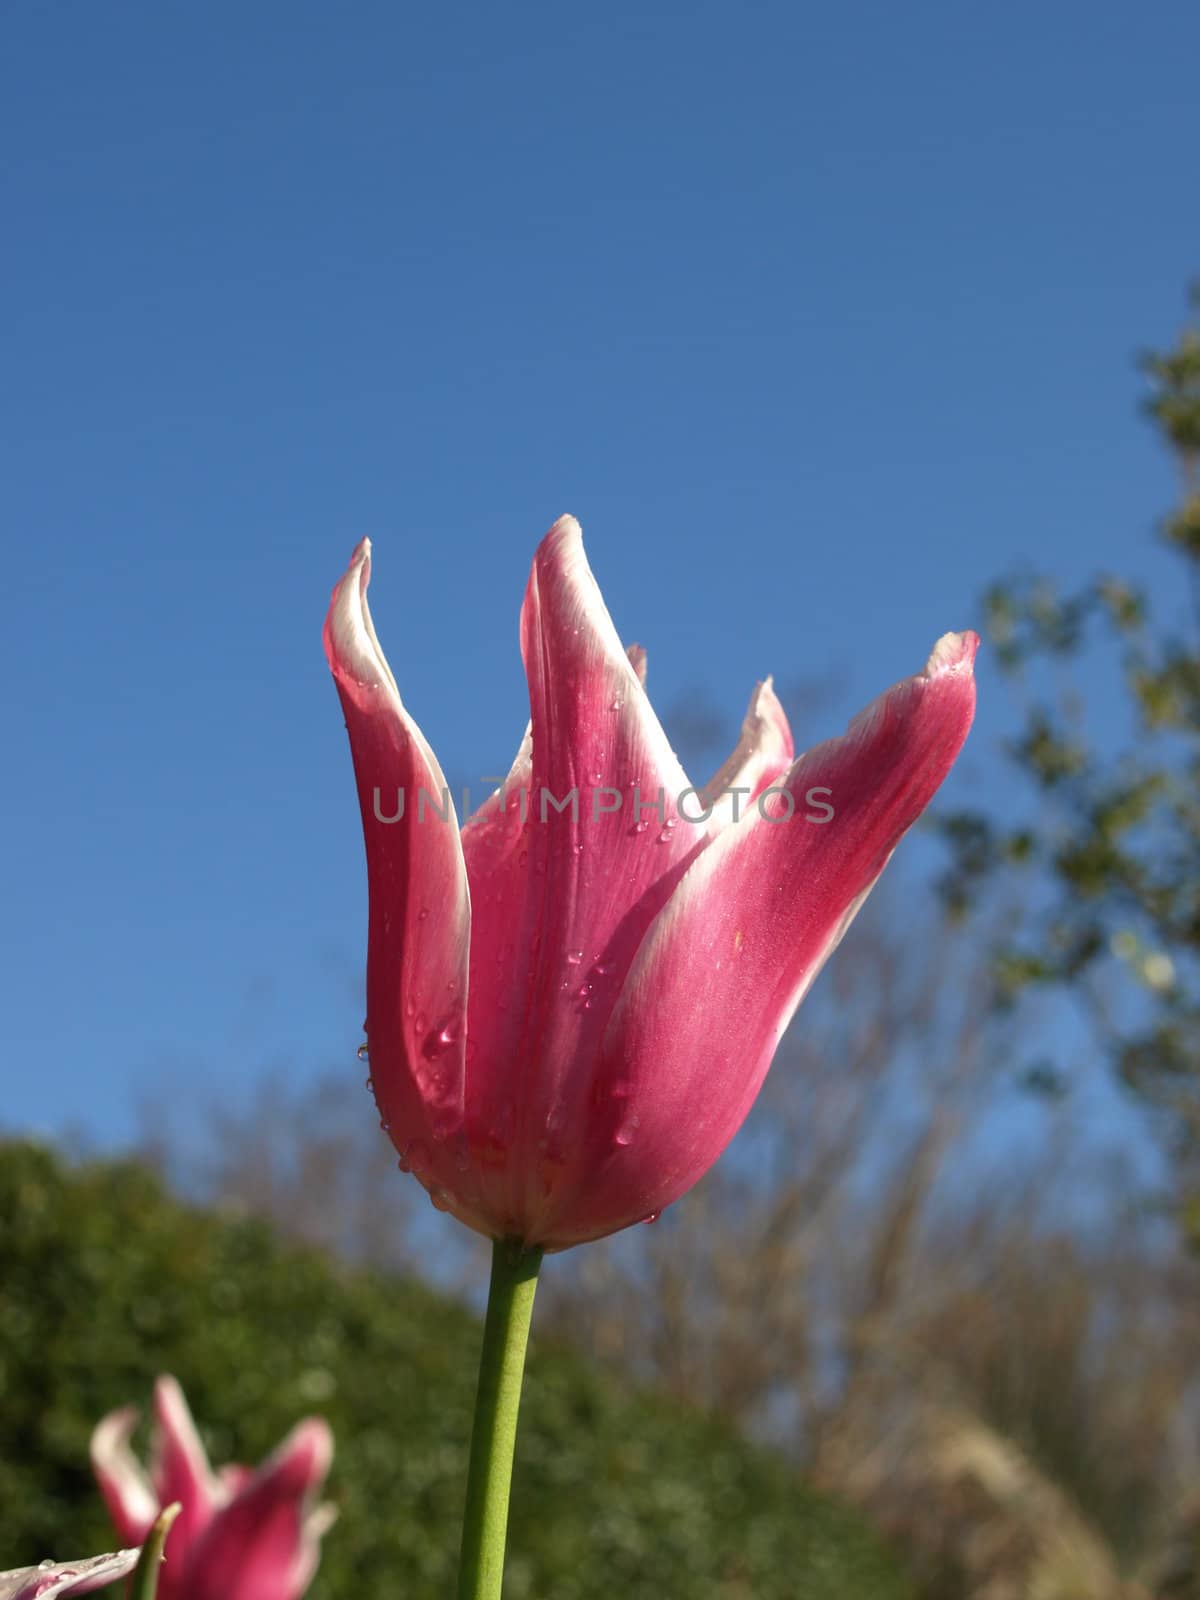 Purple tulip up close by northwoodsphoto